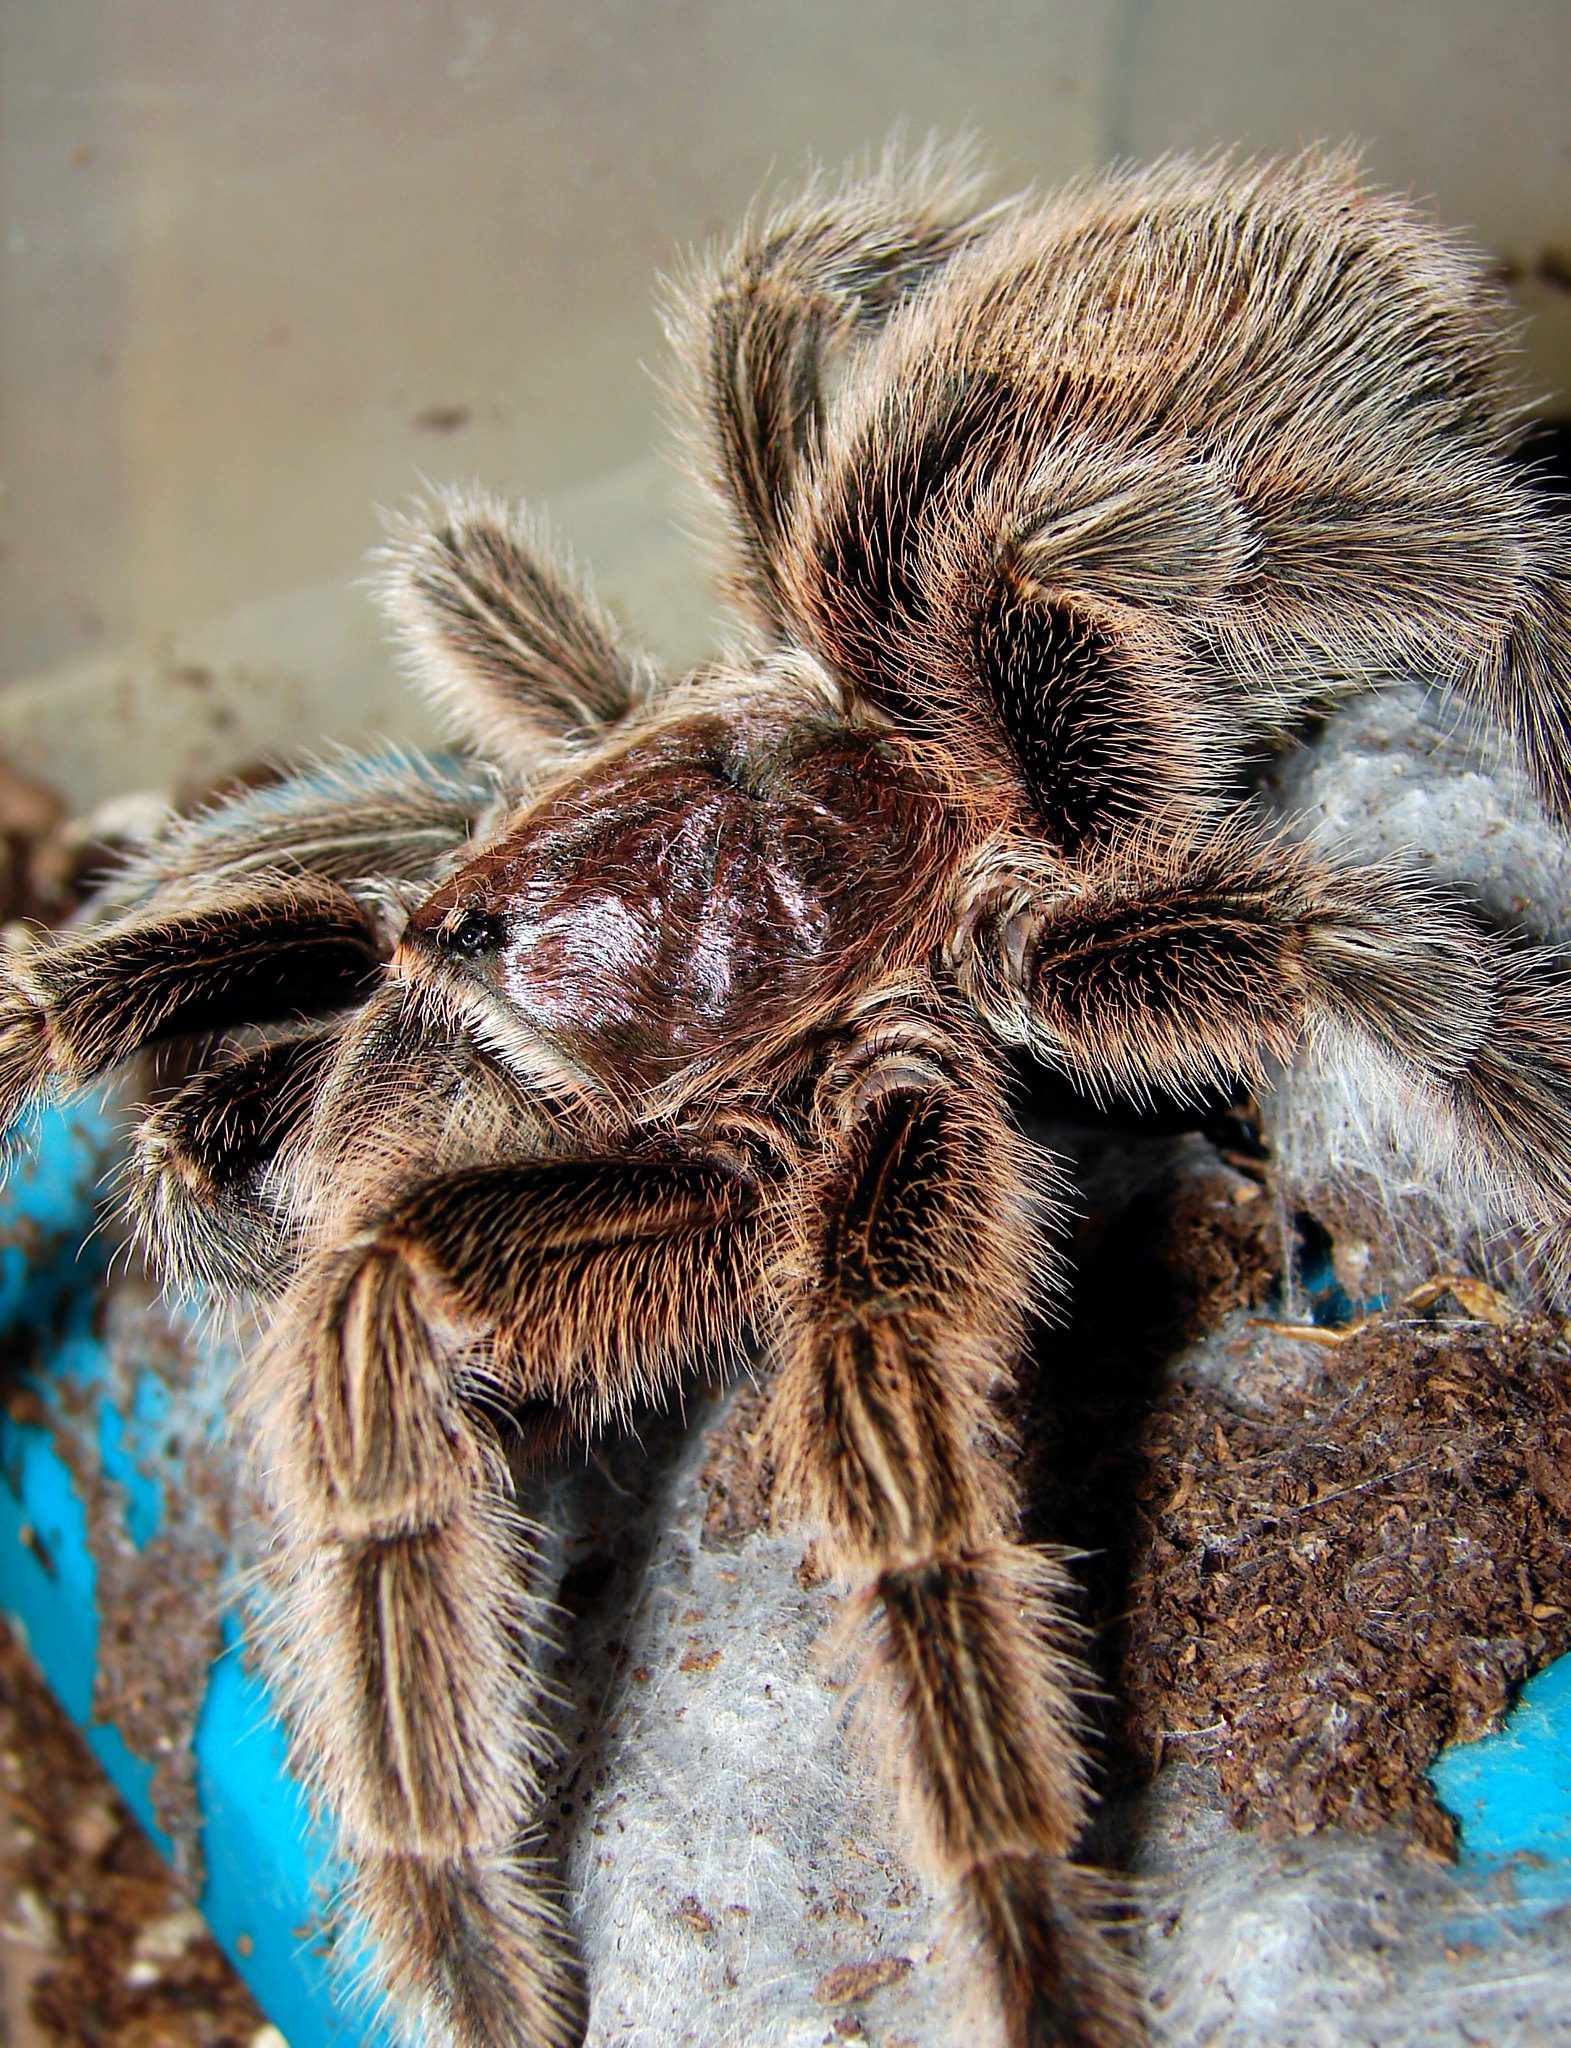 Chilean rose haired tarantula